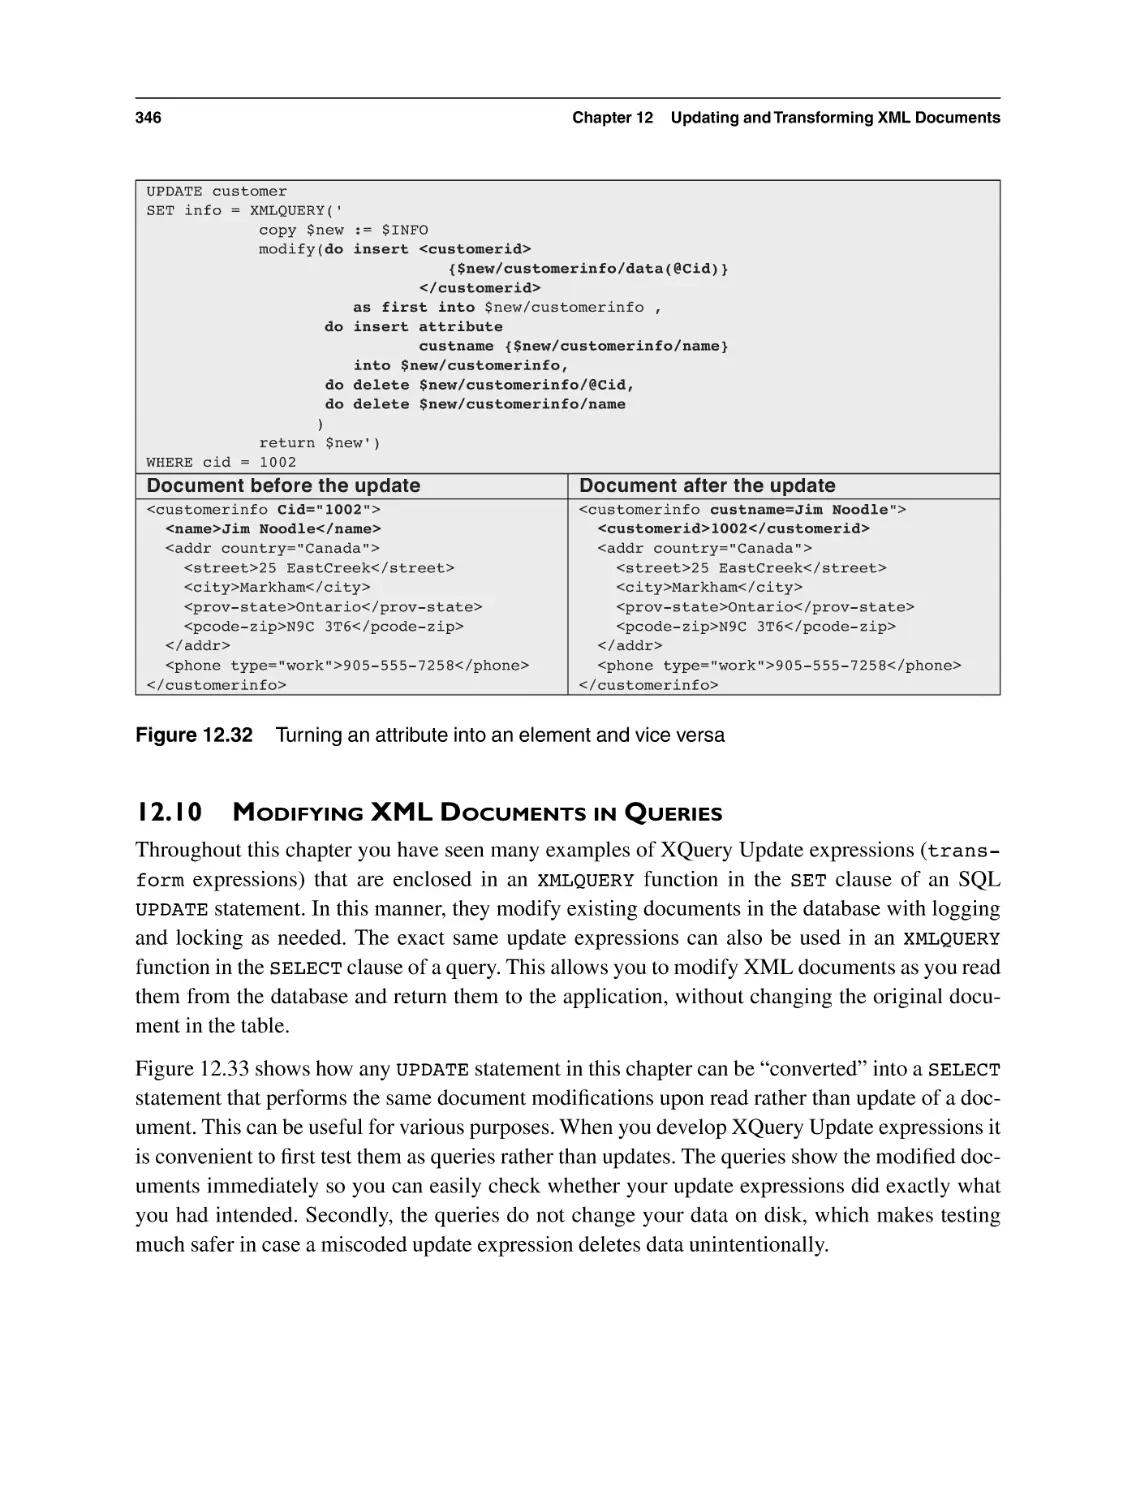 12.10 Modifying XML Documents in Queries